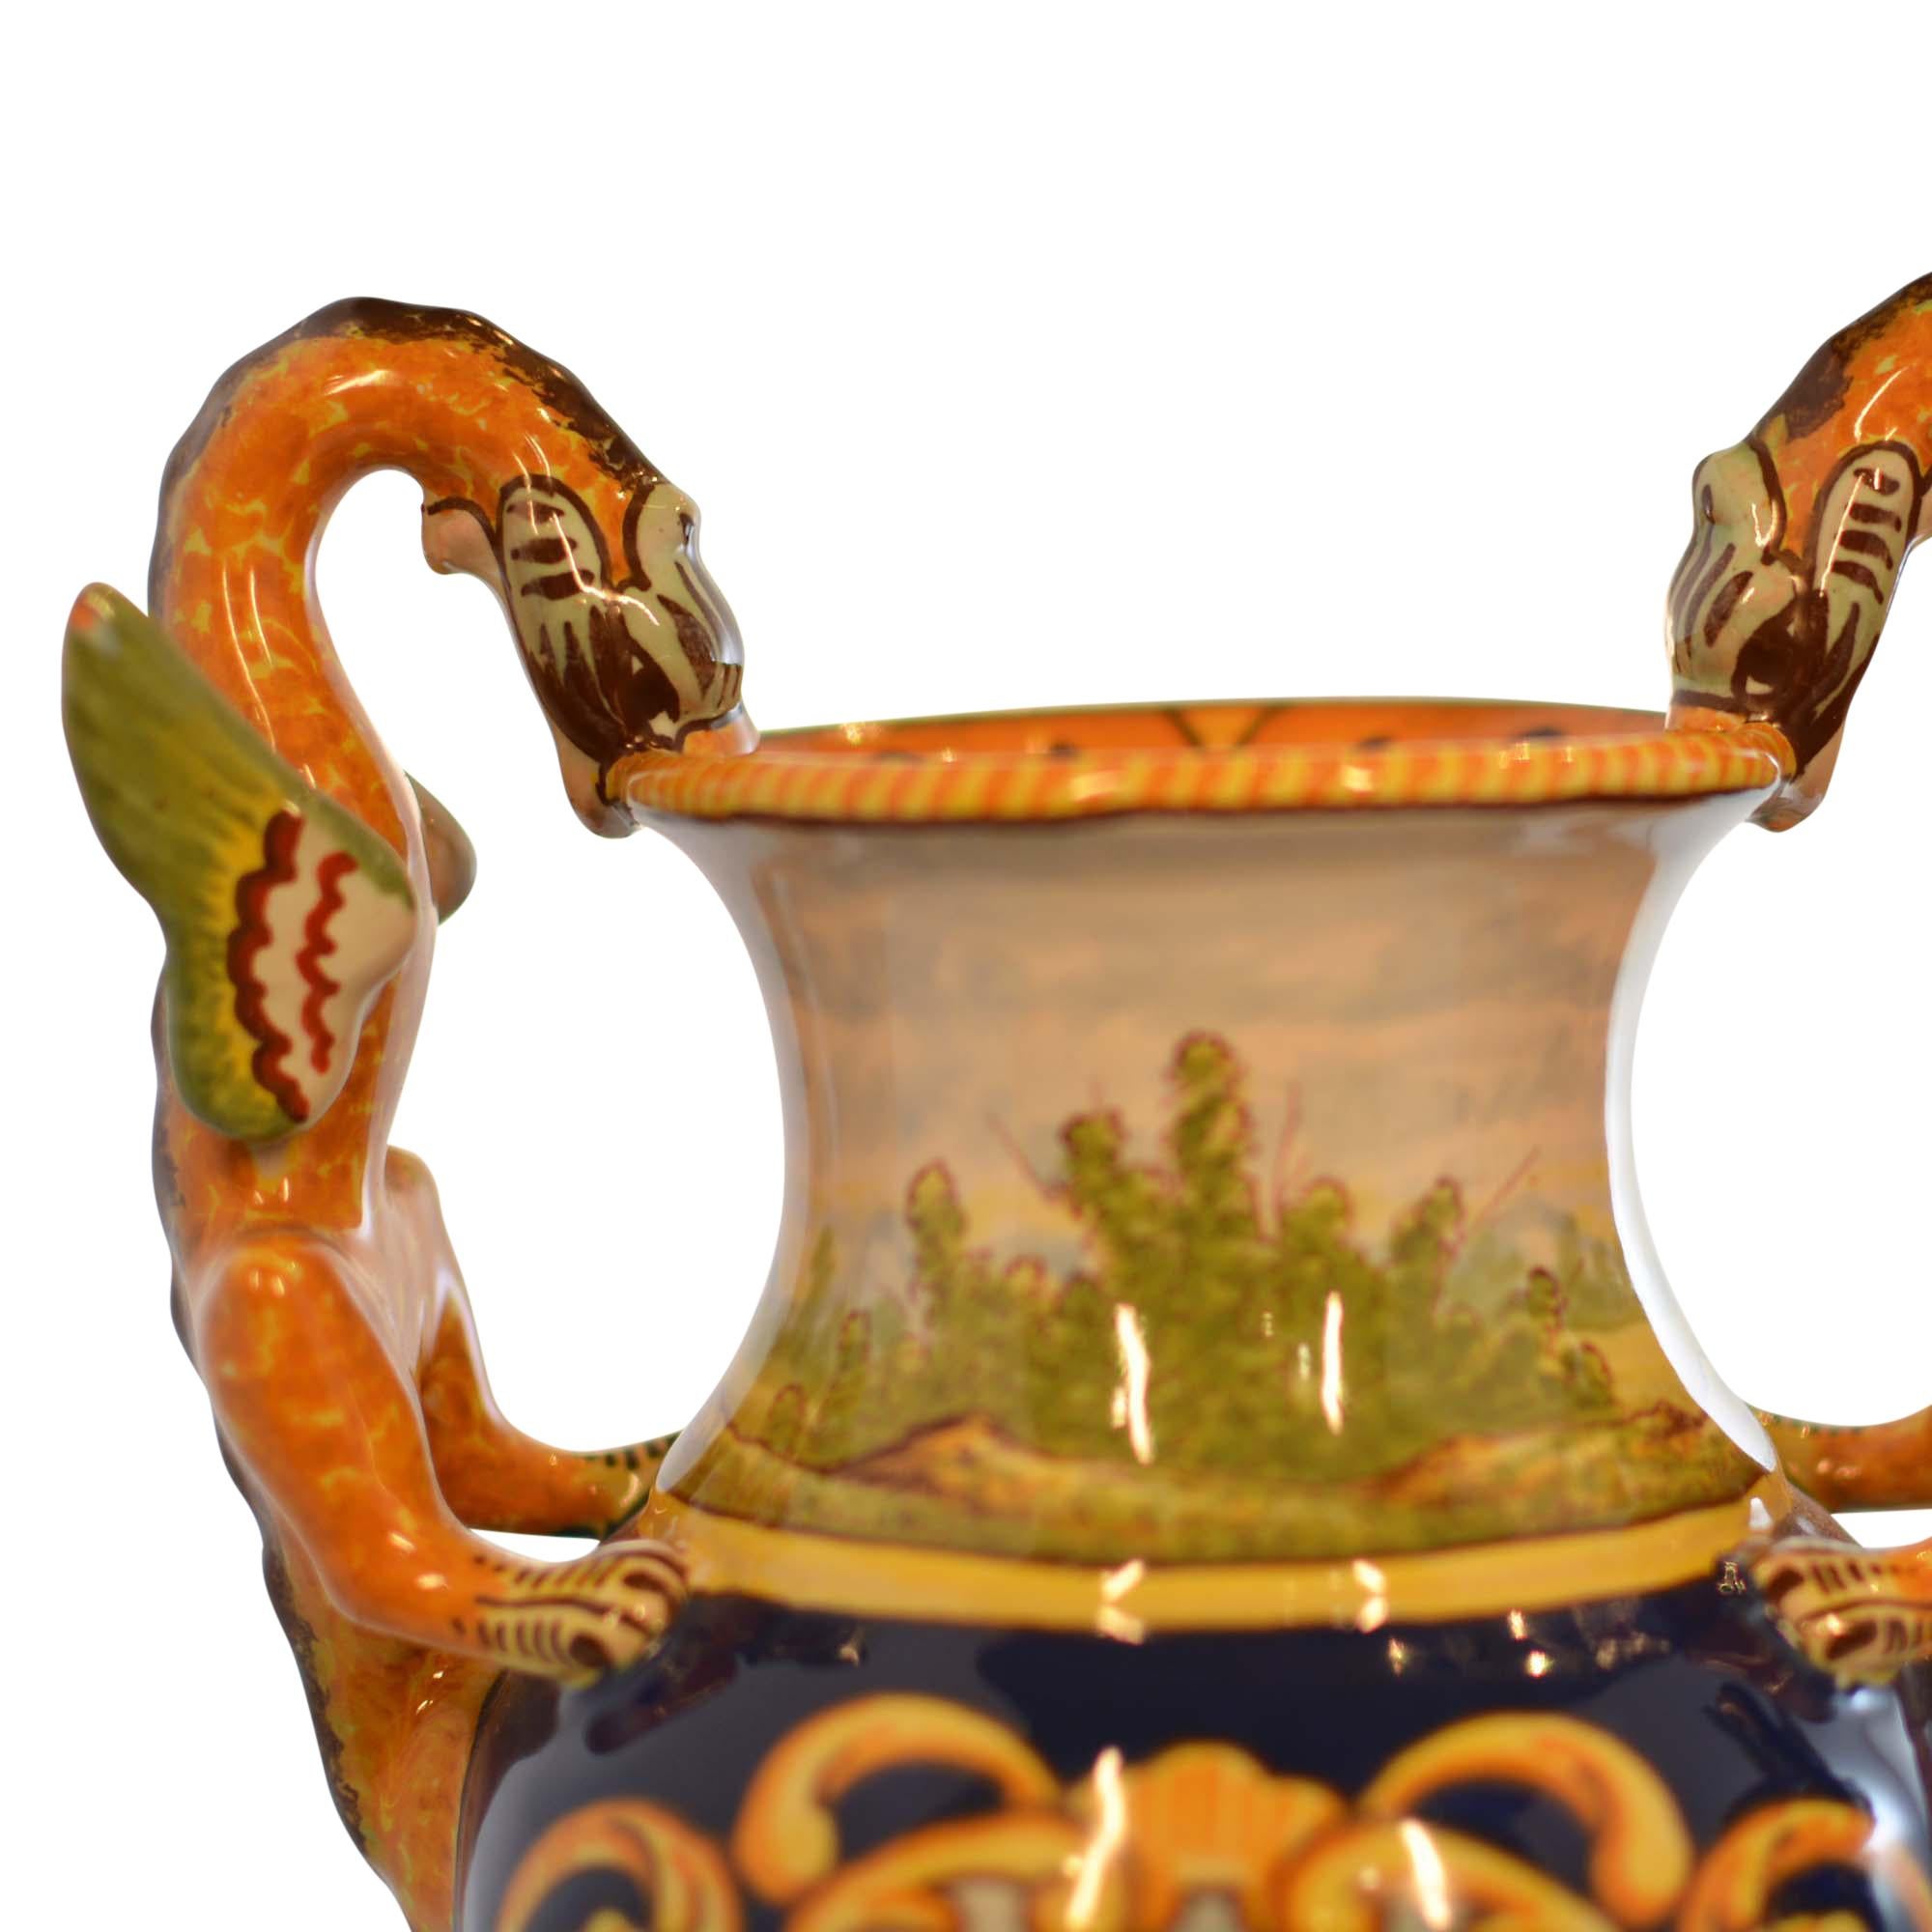 Antoine Montagnon Rouen Vases Hand Painted Cherub Scene and Dragon Handles Pair (Handgefertigt) im Angebot